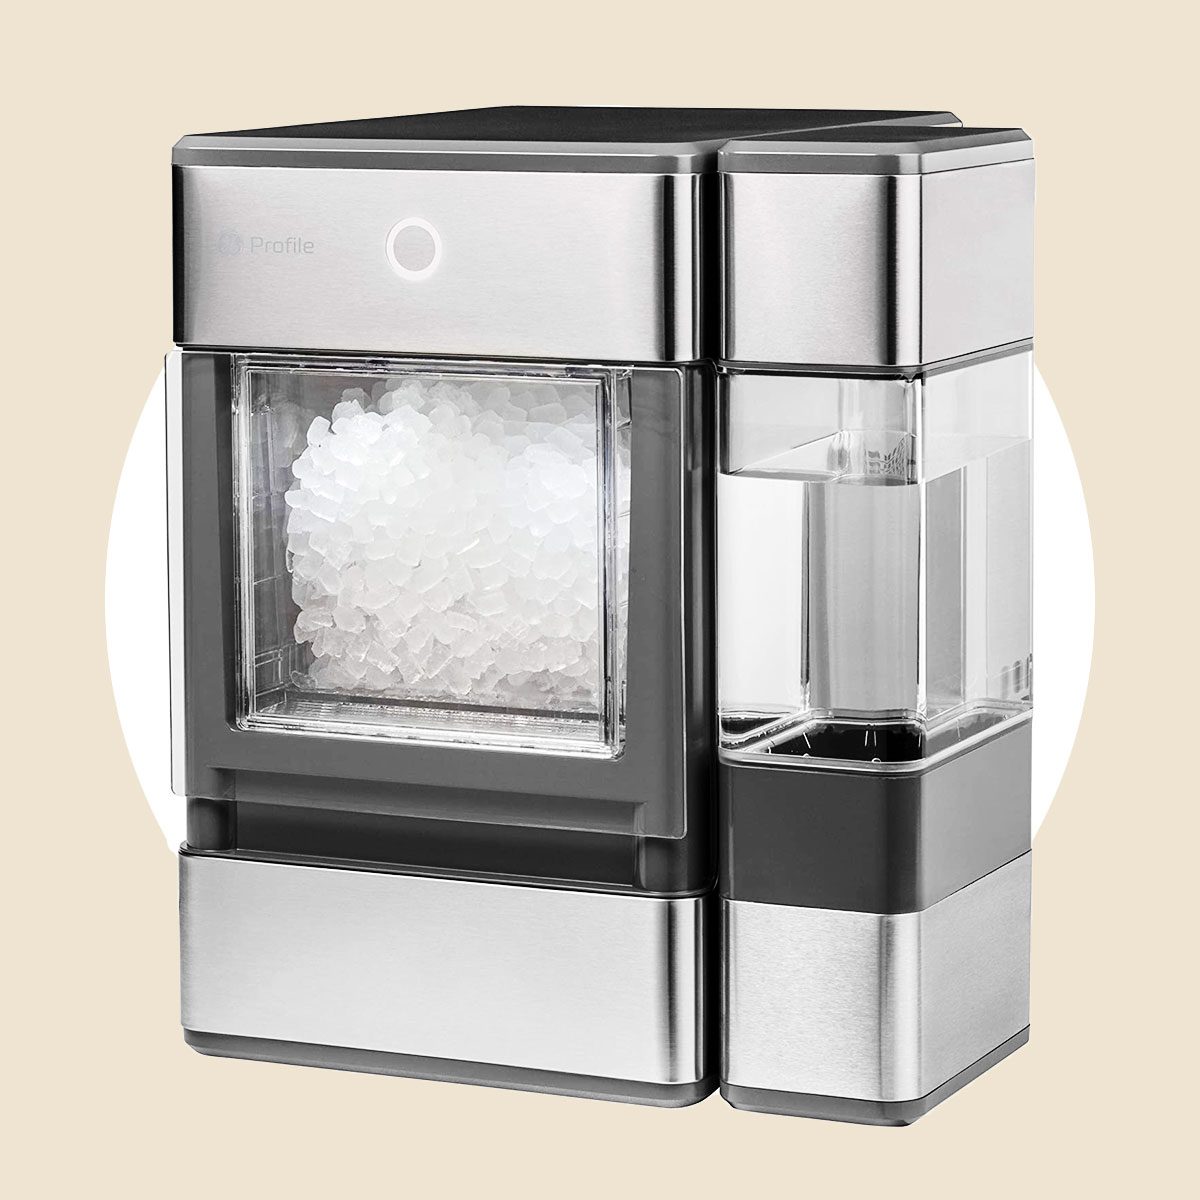 Toh Ecomm Ge Ice Maker Machine Via Amazon.com